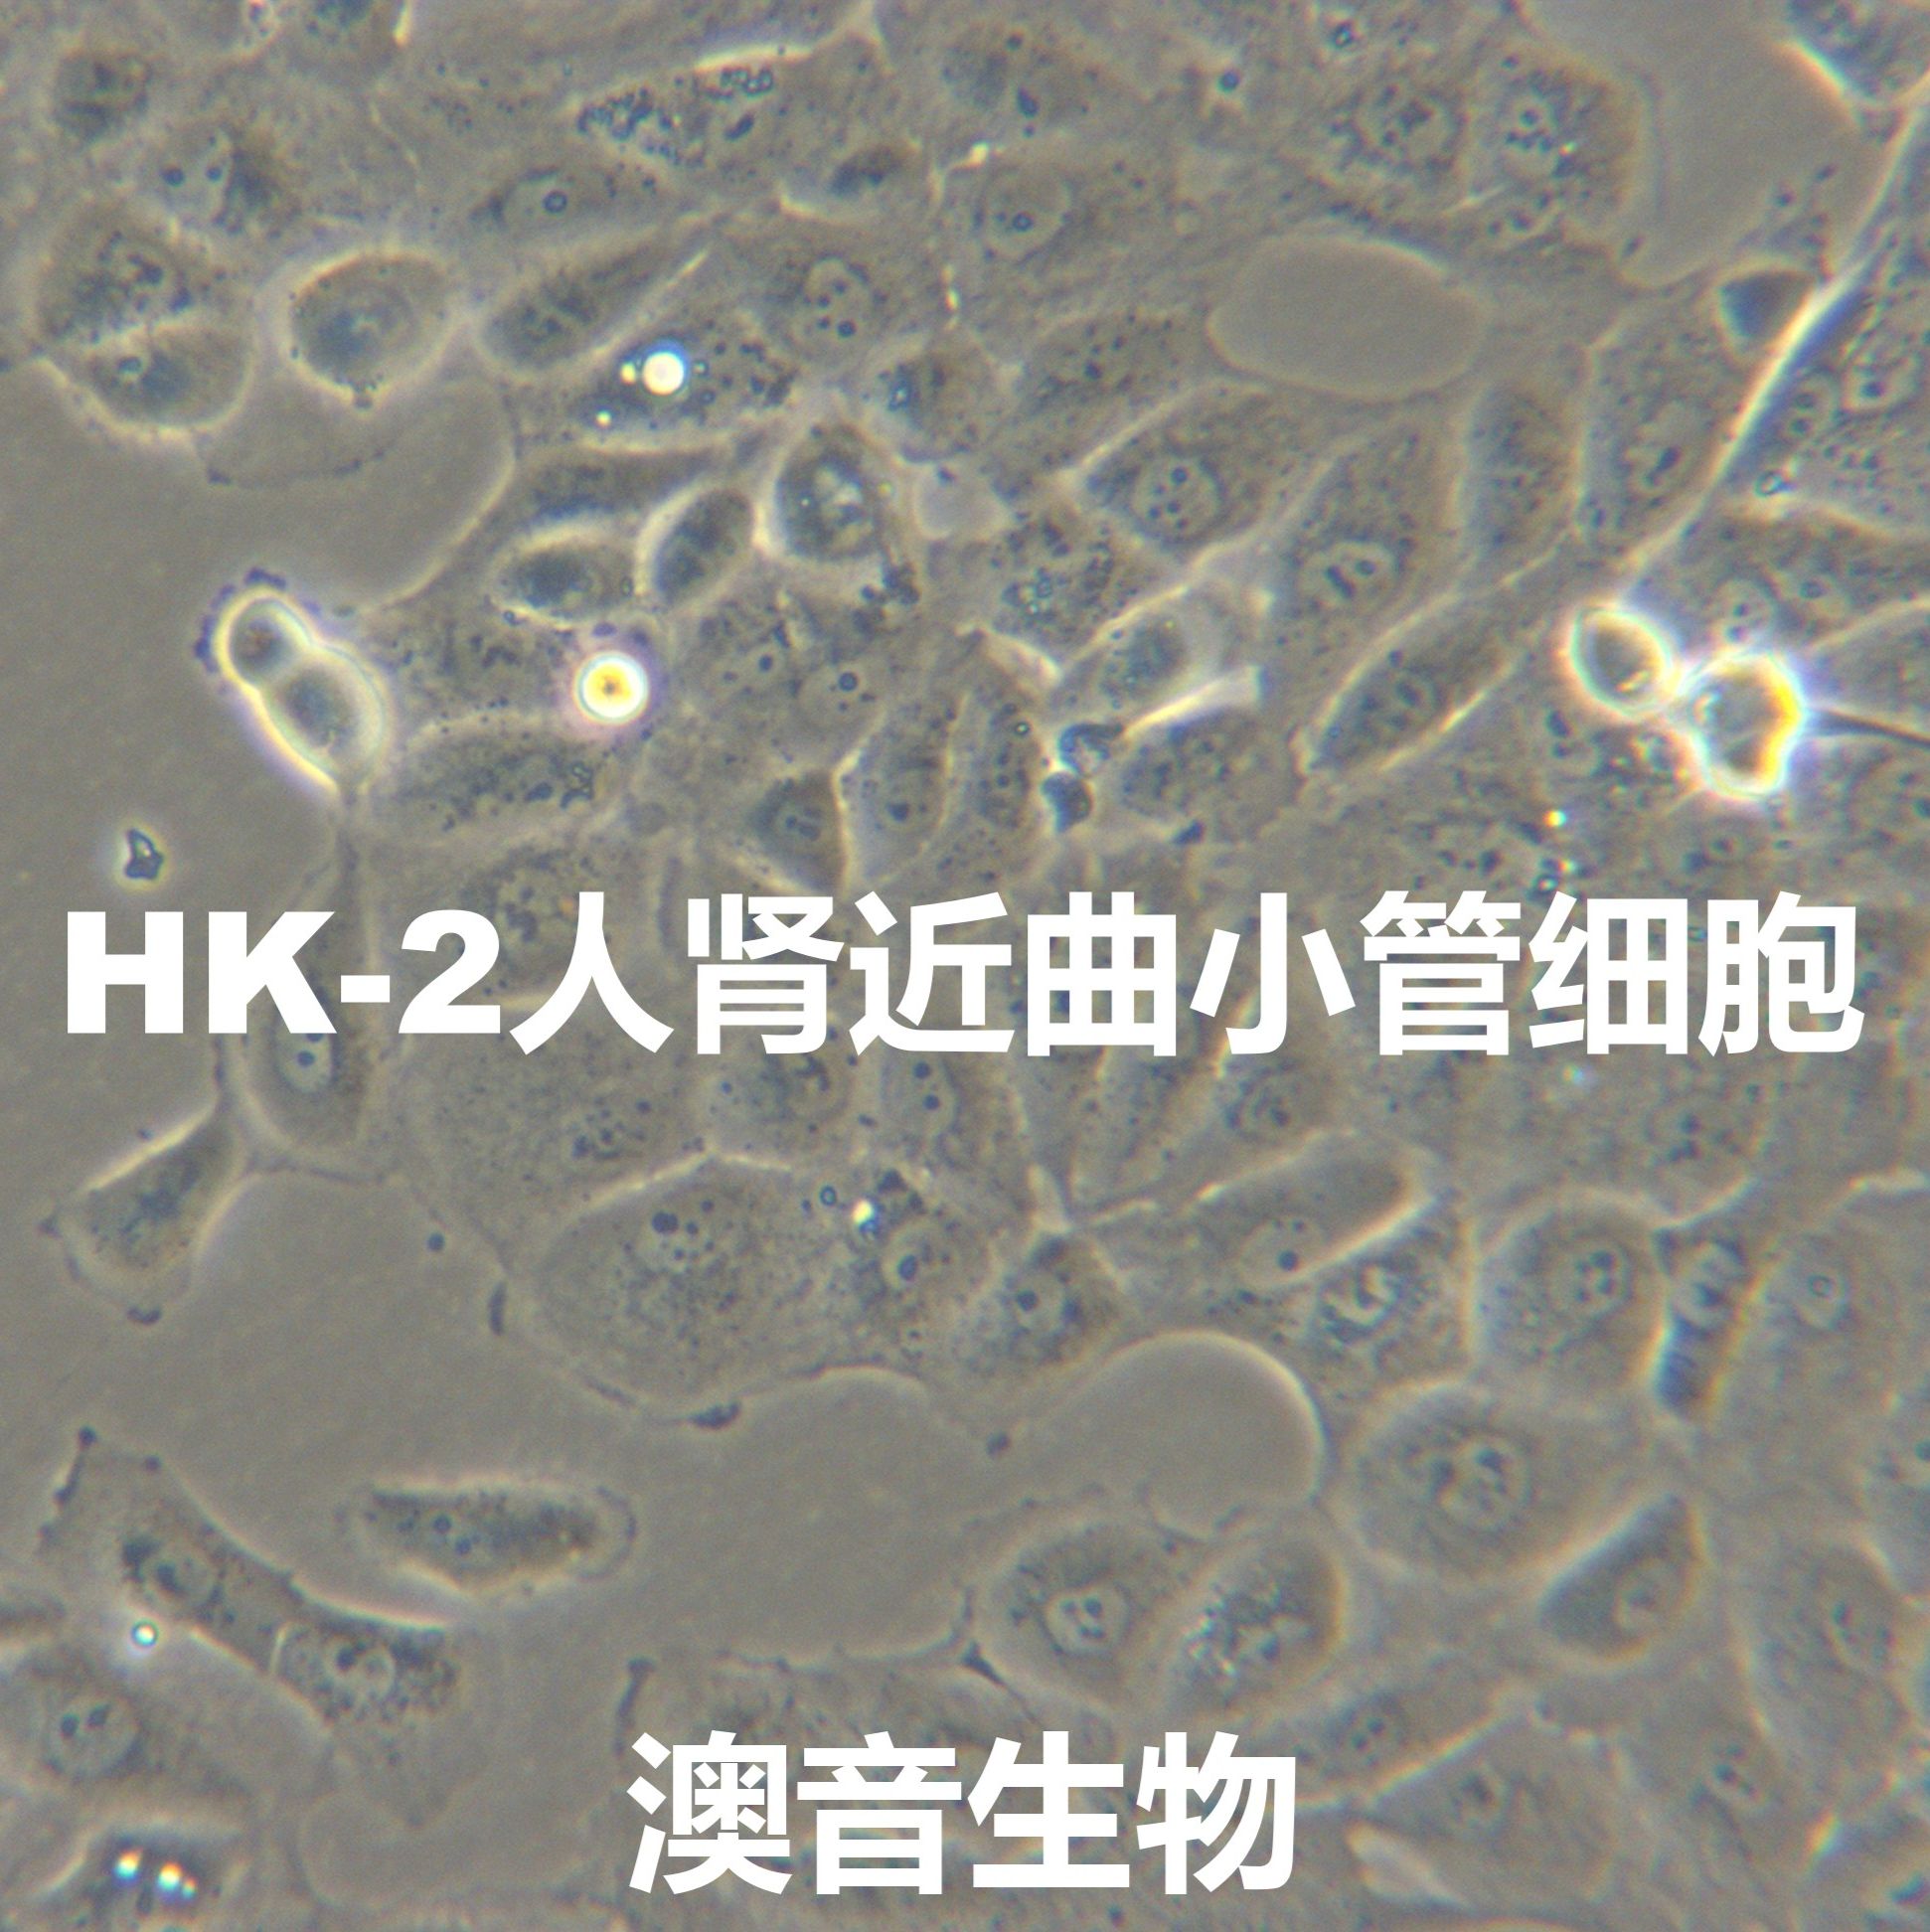 HK-2[Hk-2; HK2; Human Kidney-2]肾近曲小管细胞